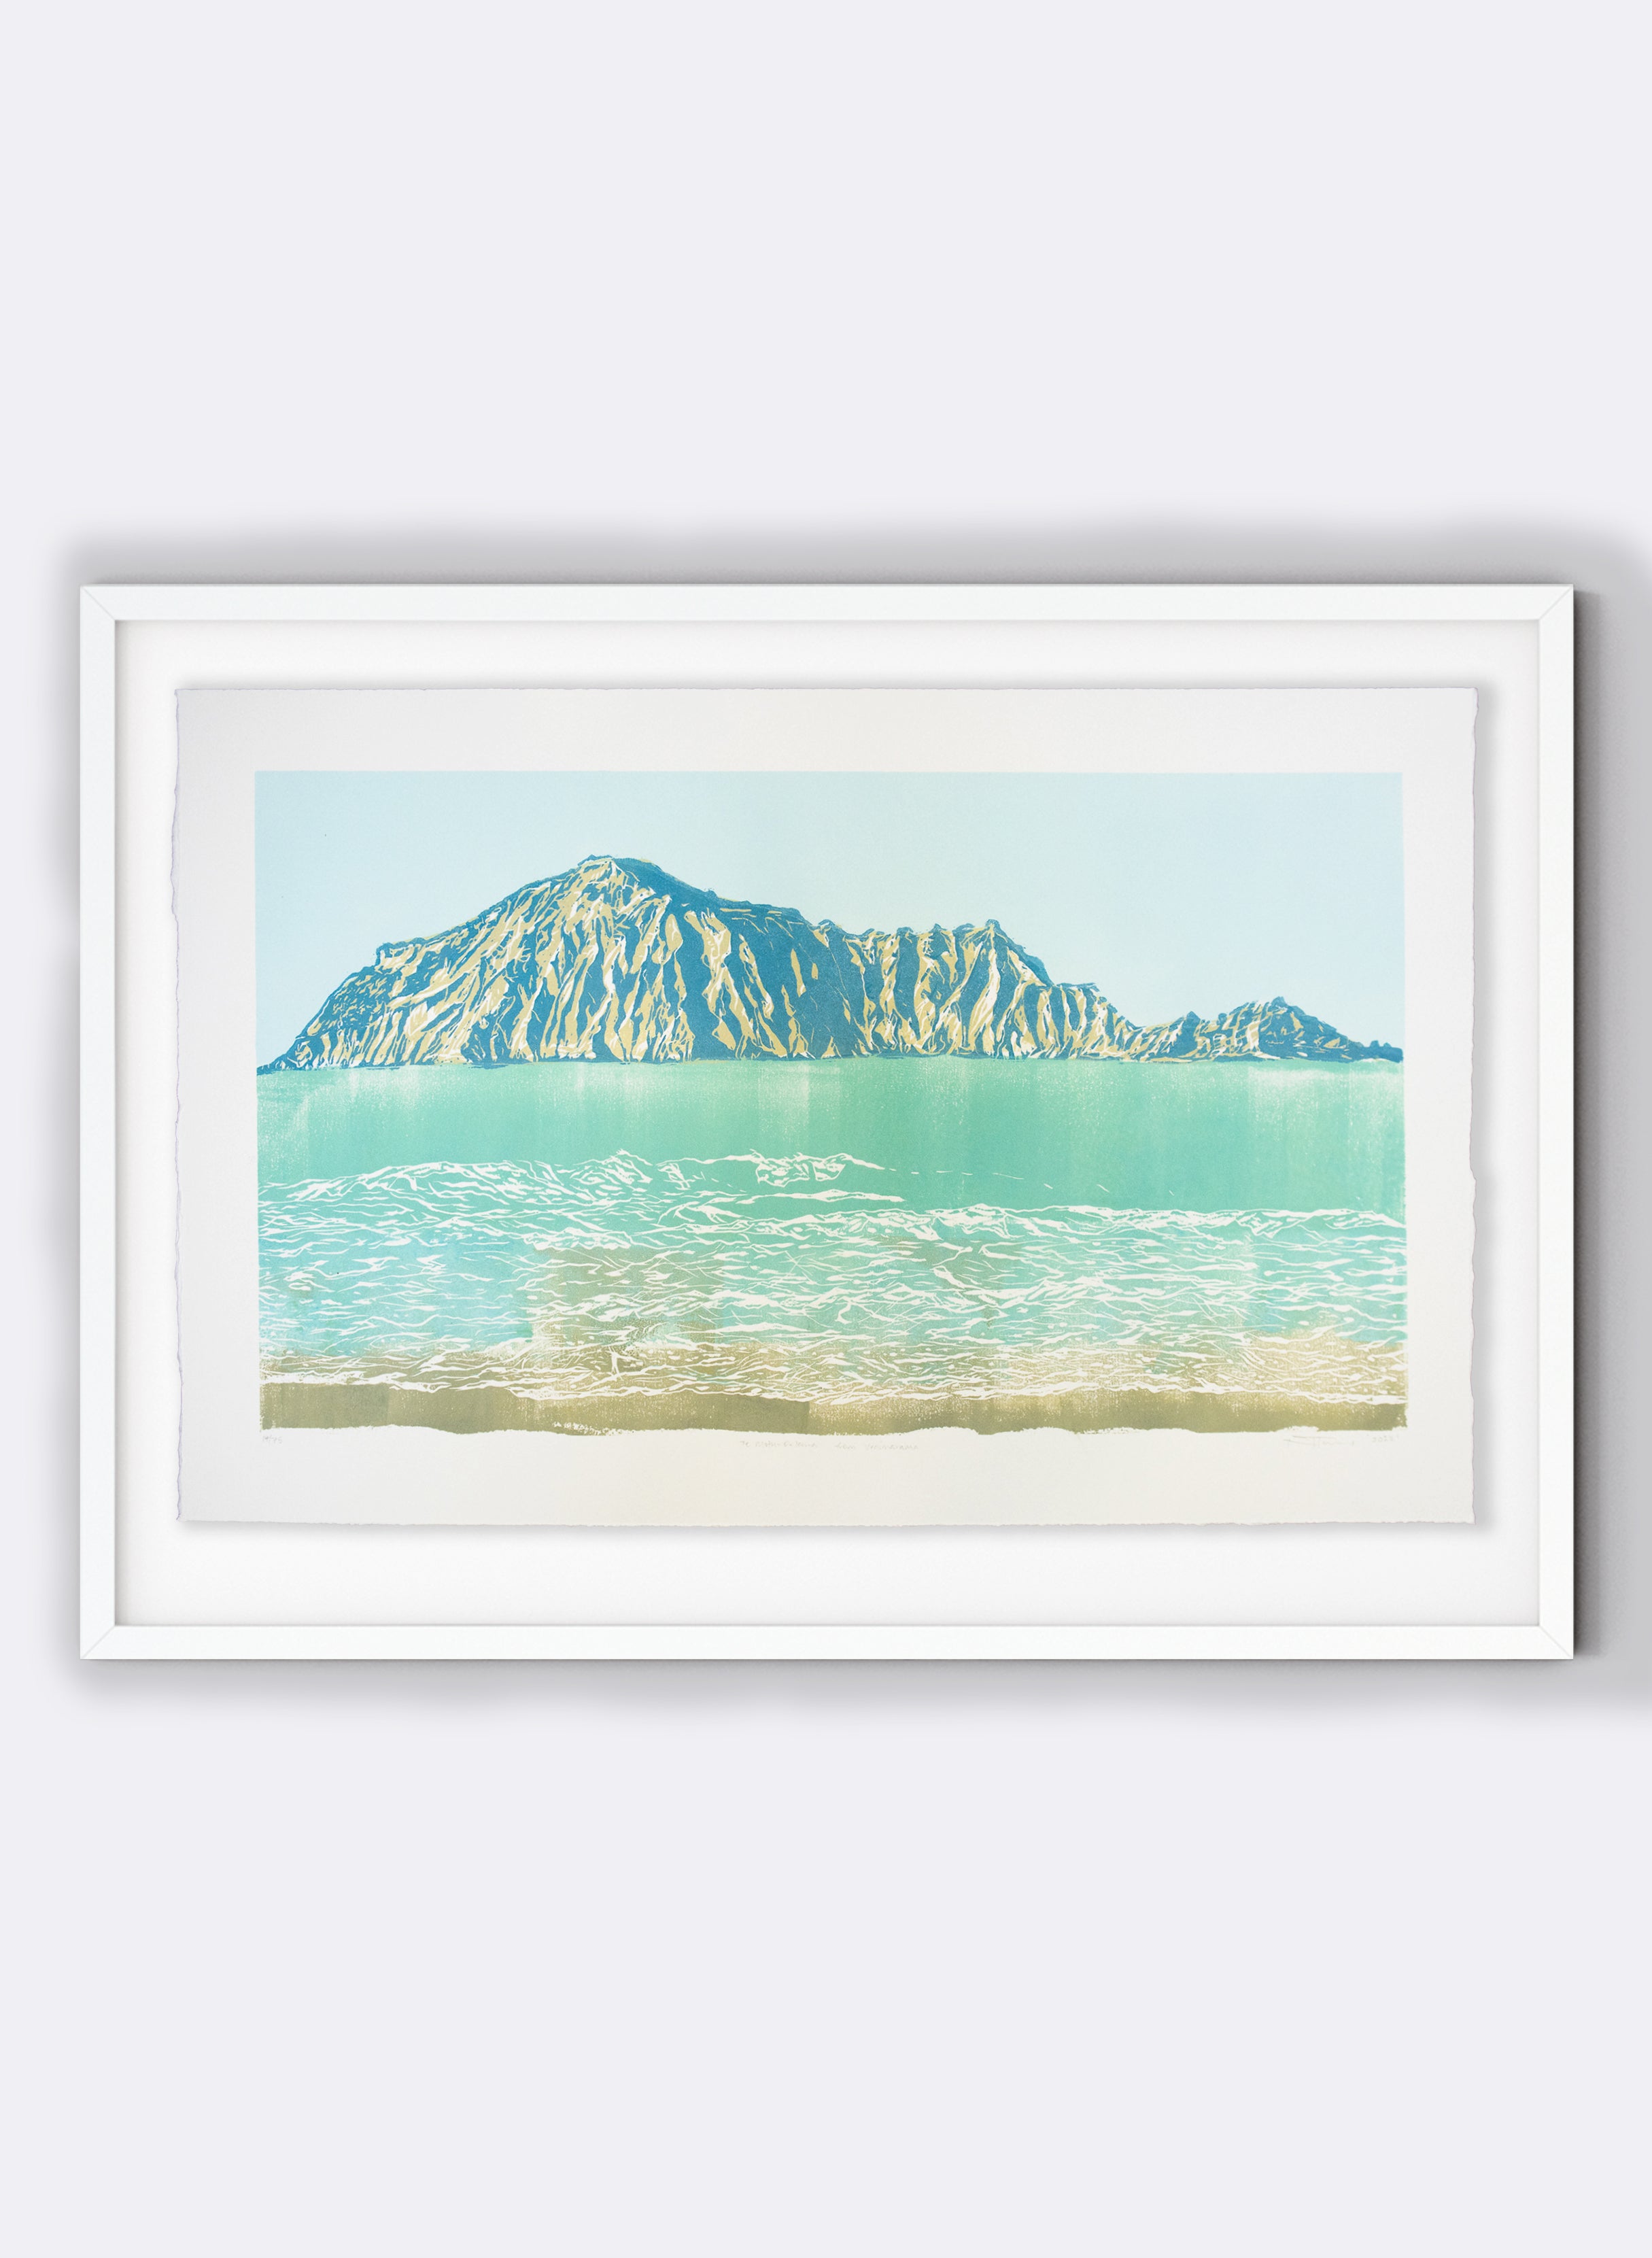 Te Motu-o-Kura/ Bare Island | Small - Woodblock Print